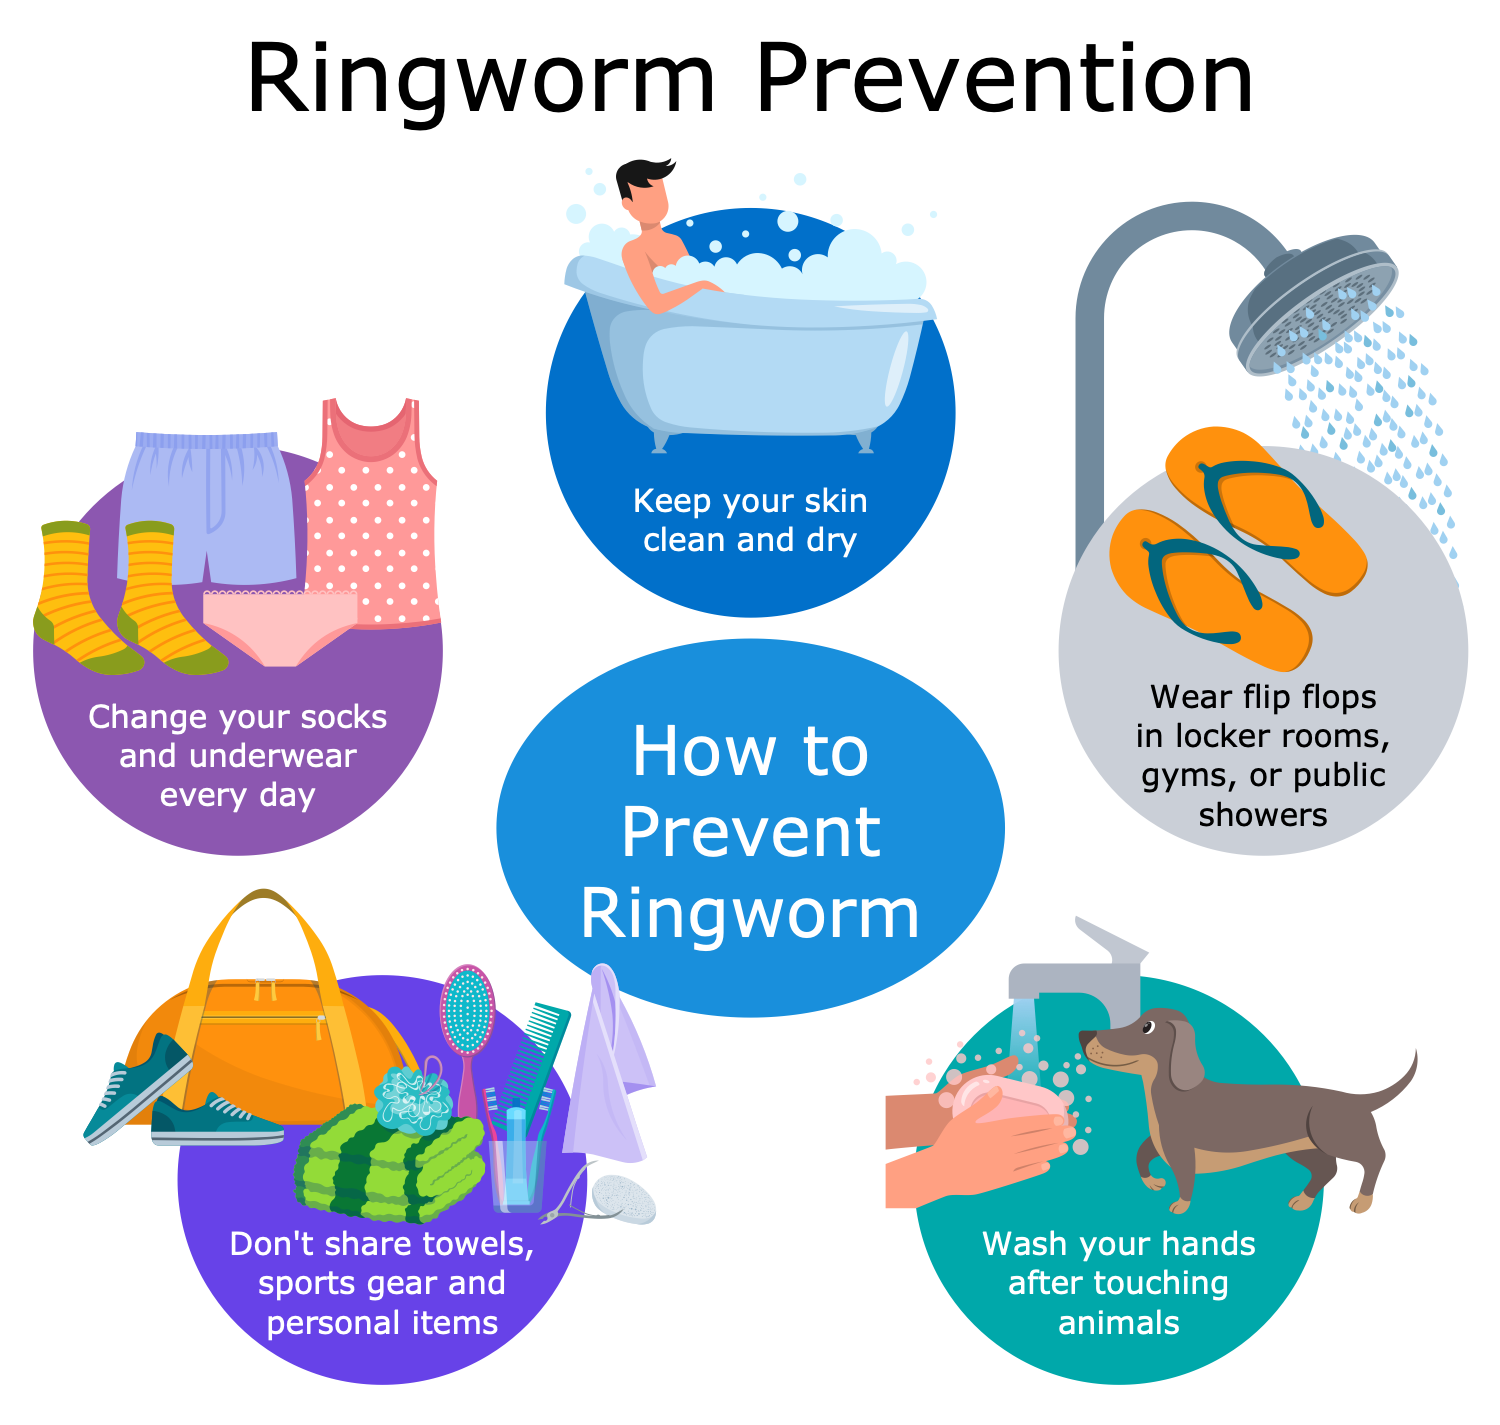 Ringworm Prevention